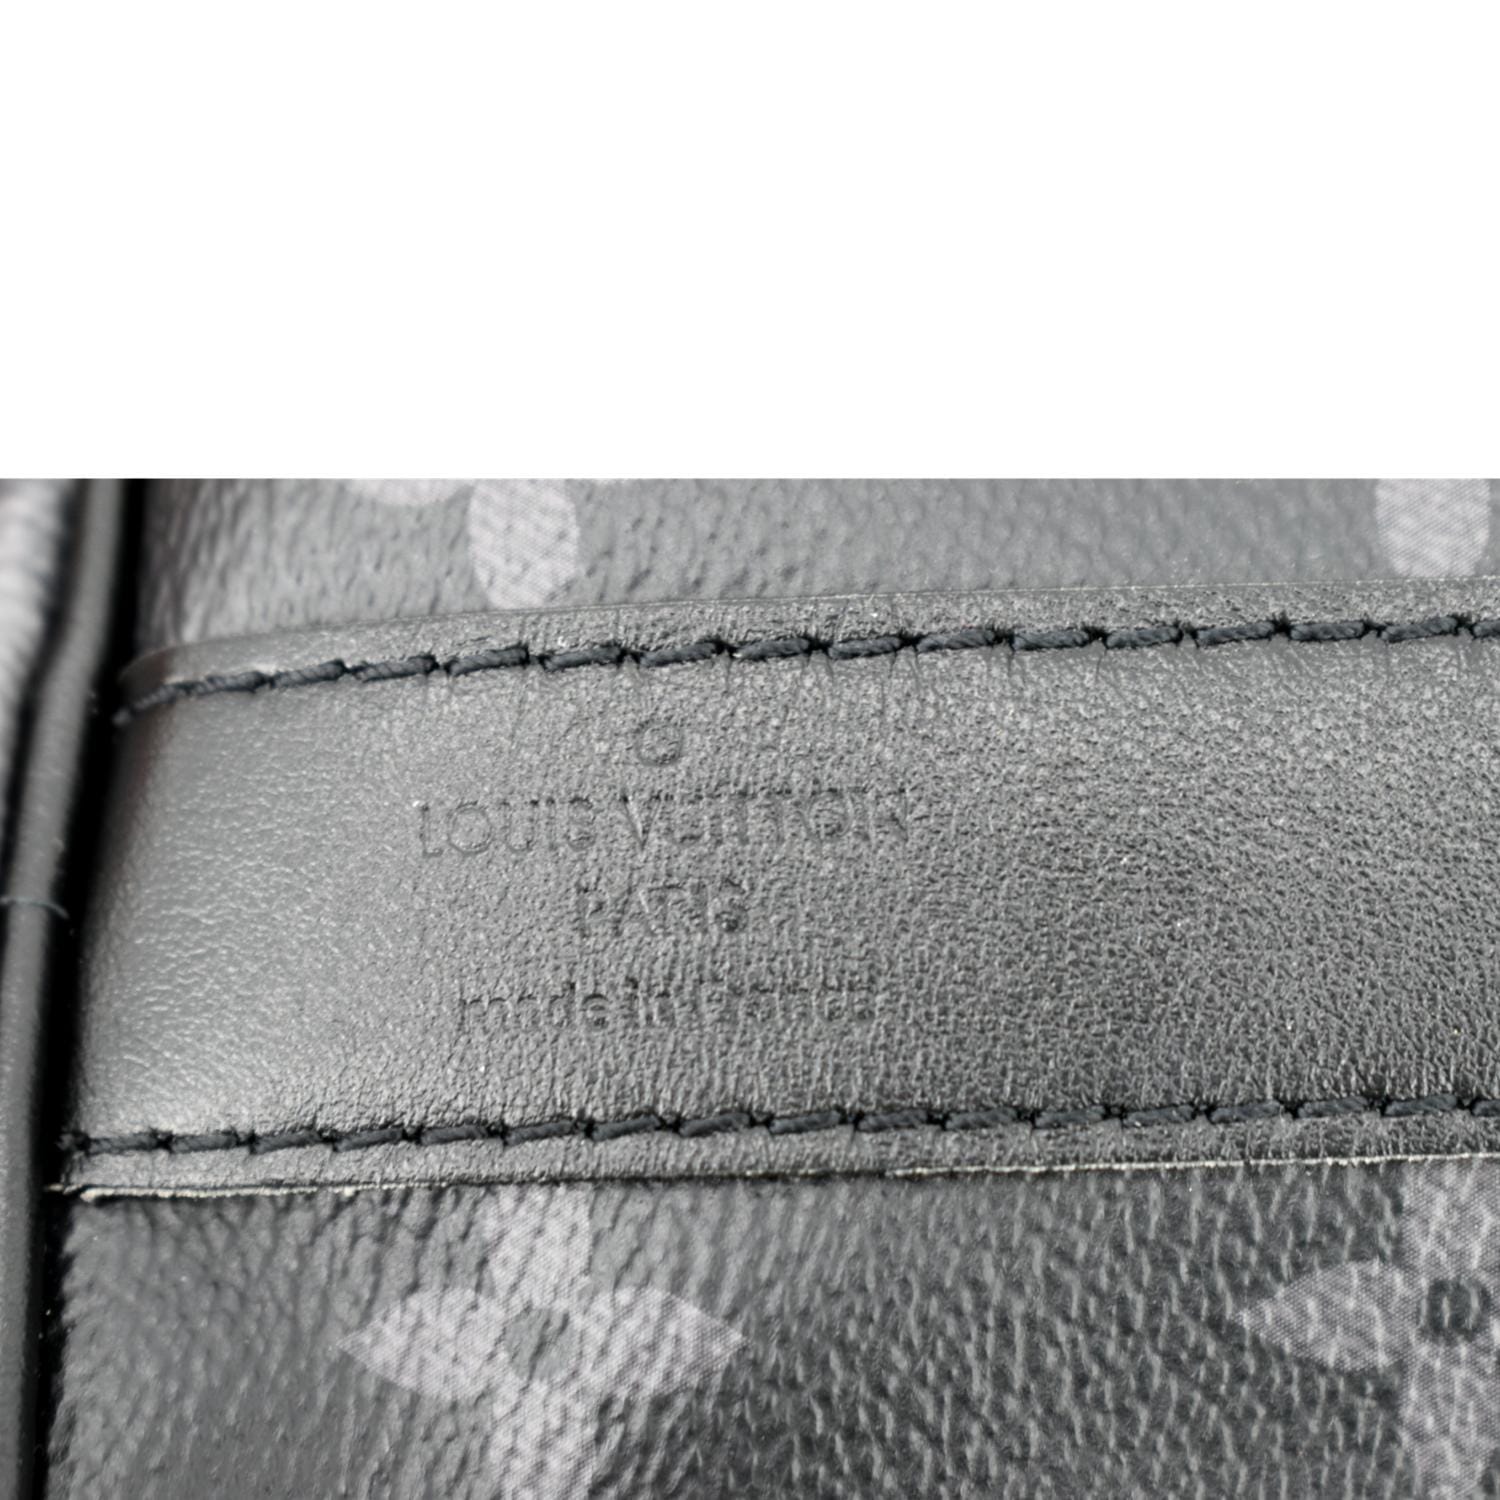 Louis Vuitton Keepall Bandouliere Bag Limited Edition Patchwork Monogram  Eclipse 50 - ShopStyle